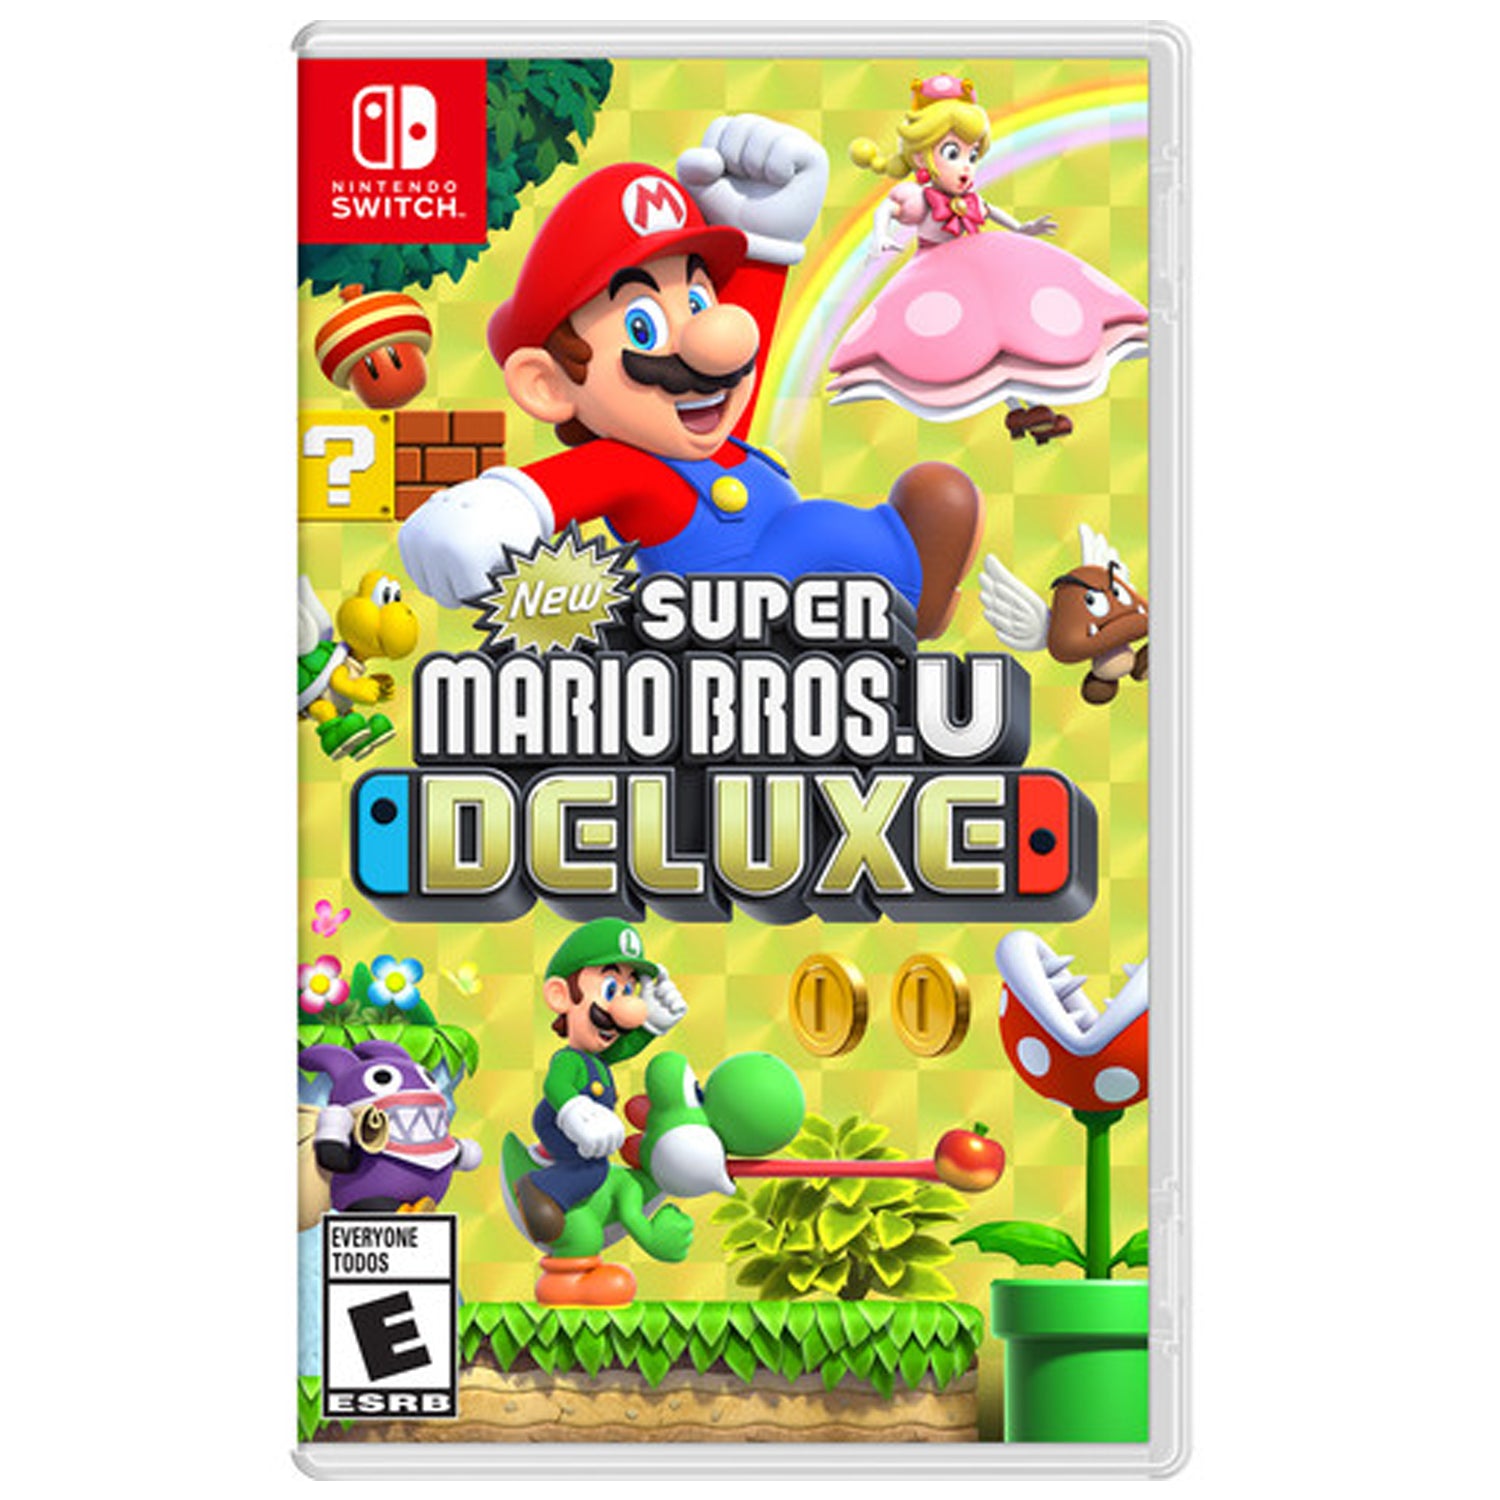 New Super Mario Bros. U Deluxe + The Legend of Zelda: Breath of the Wild - Two Game Bundle - Nintendo Switch